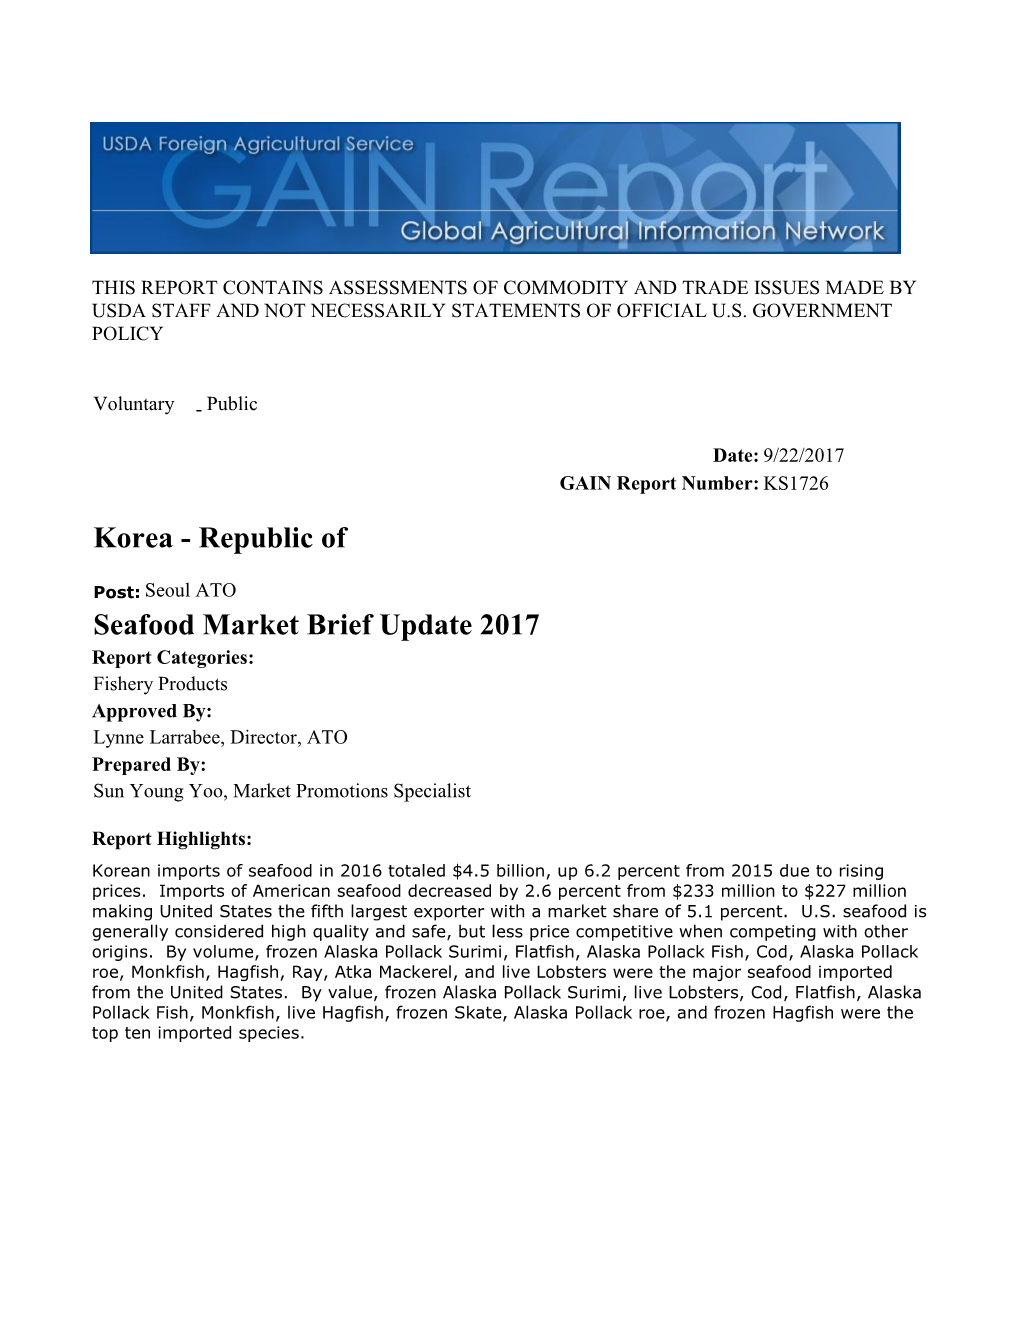 Seafood Market Brief Update 2017 Korea